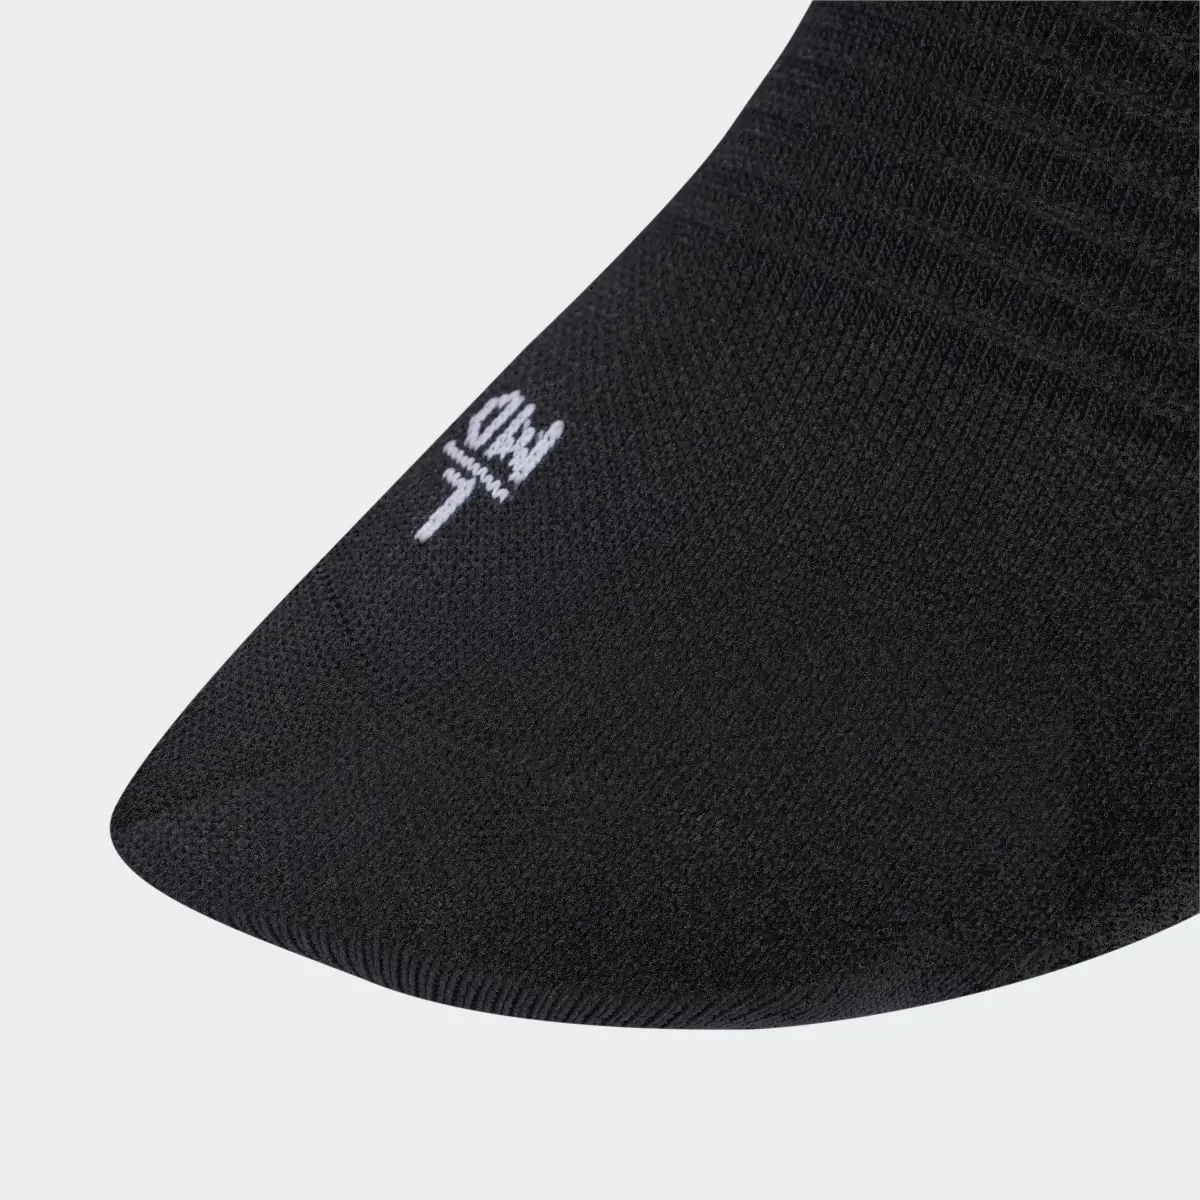 Adidas Performance Designed for Sport Ankle Socks. 2